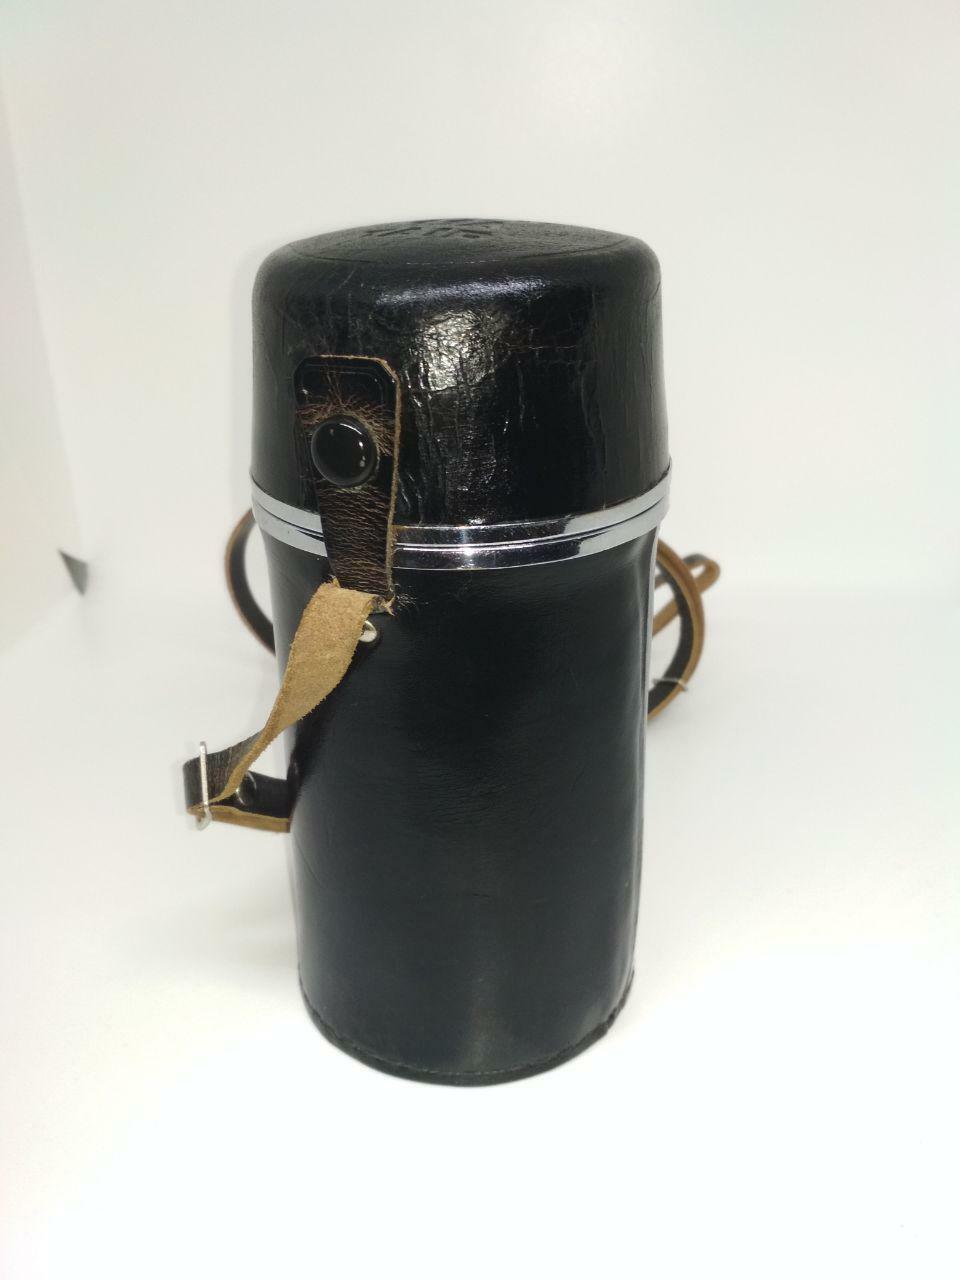 TAIR-11A Tair-11 Original Storage Box Leather Case Tube Lens Holder USSR